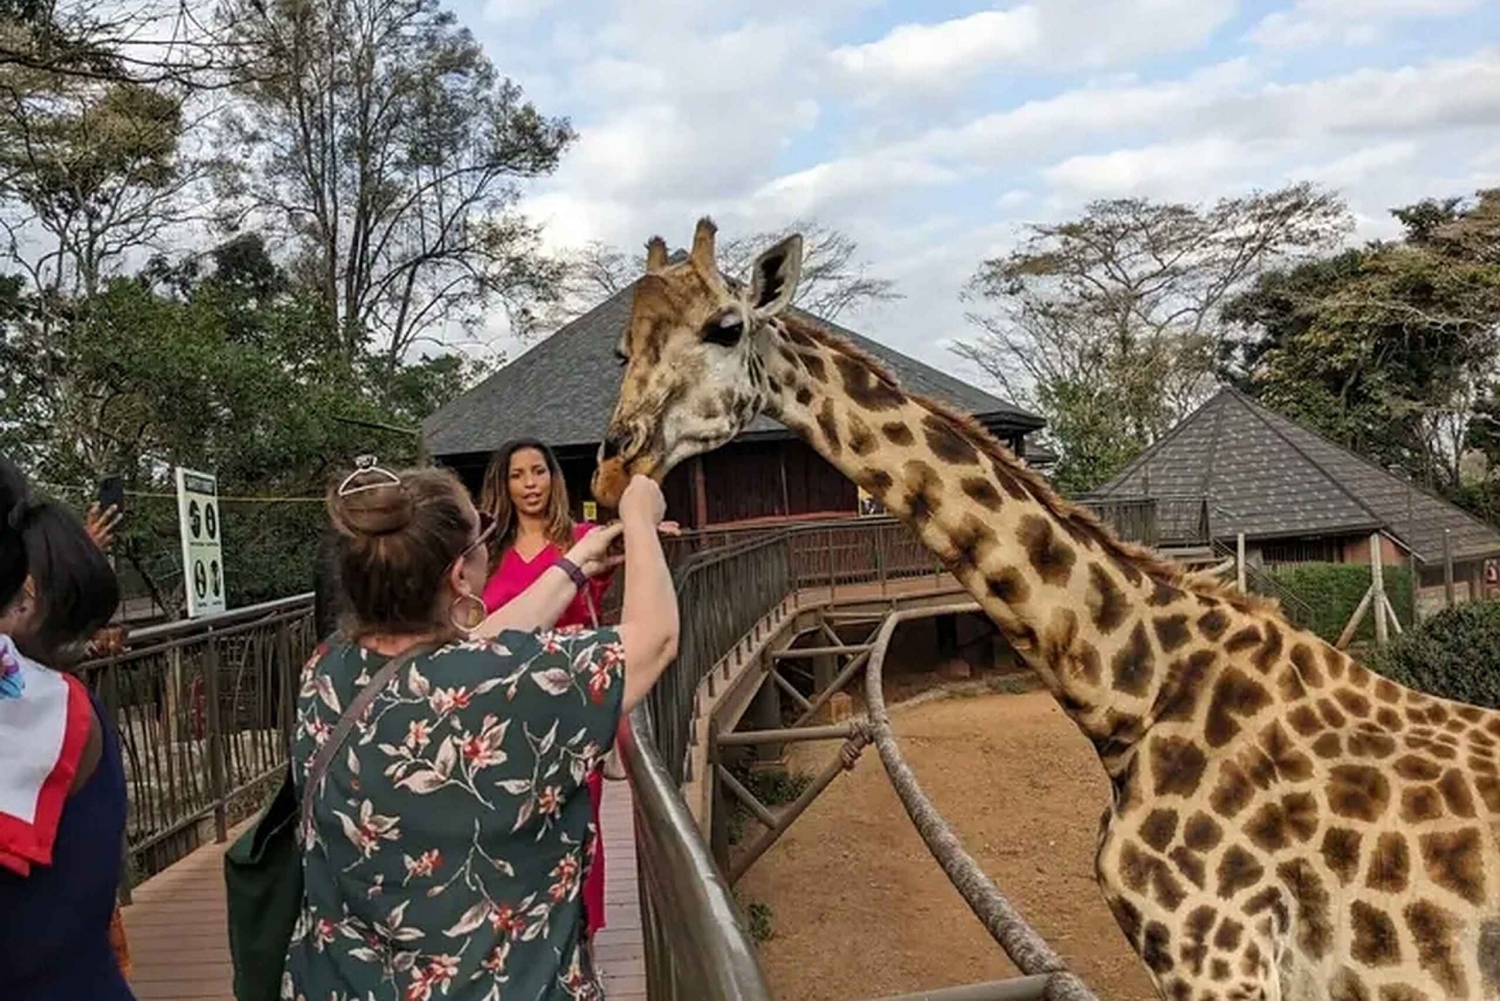 Nairobi:Sheldrick Animal orphanage and Giraffes Centre Tour.